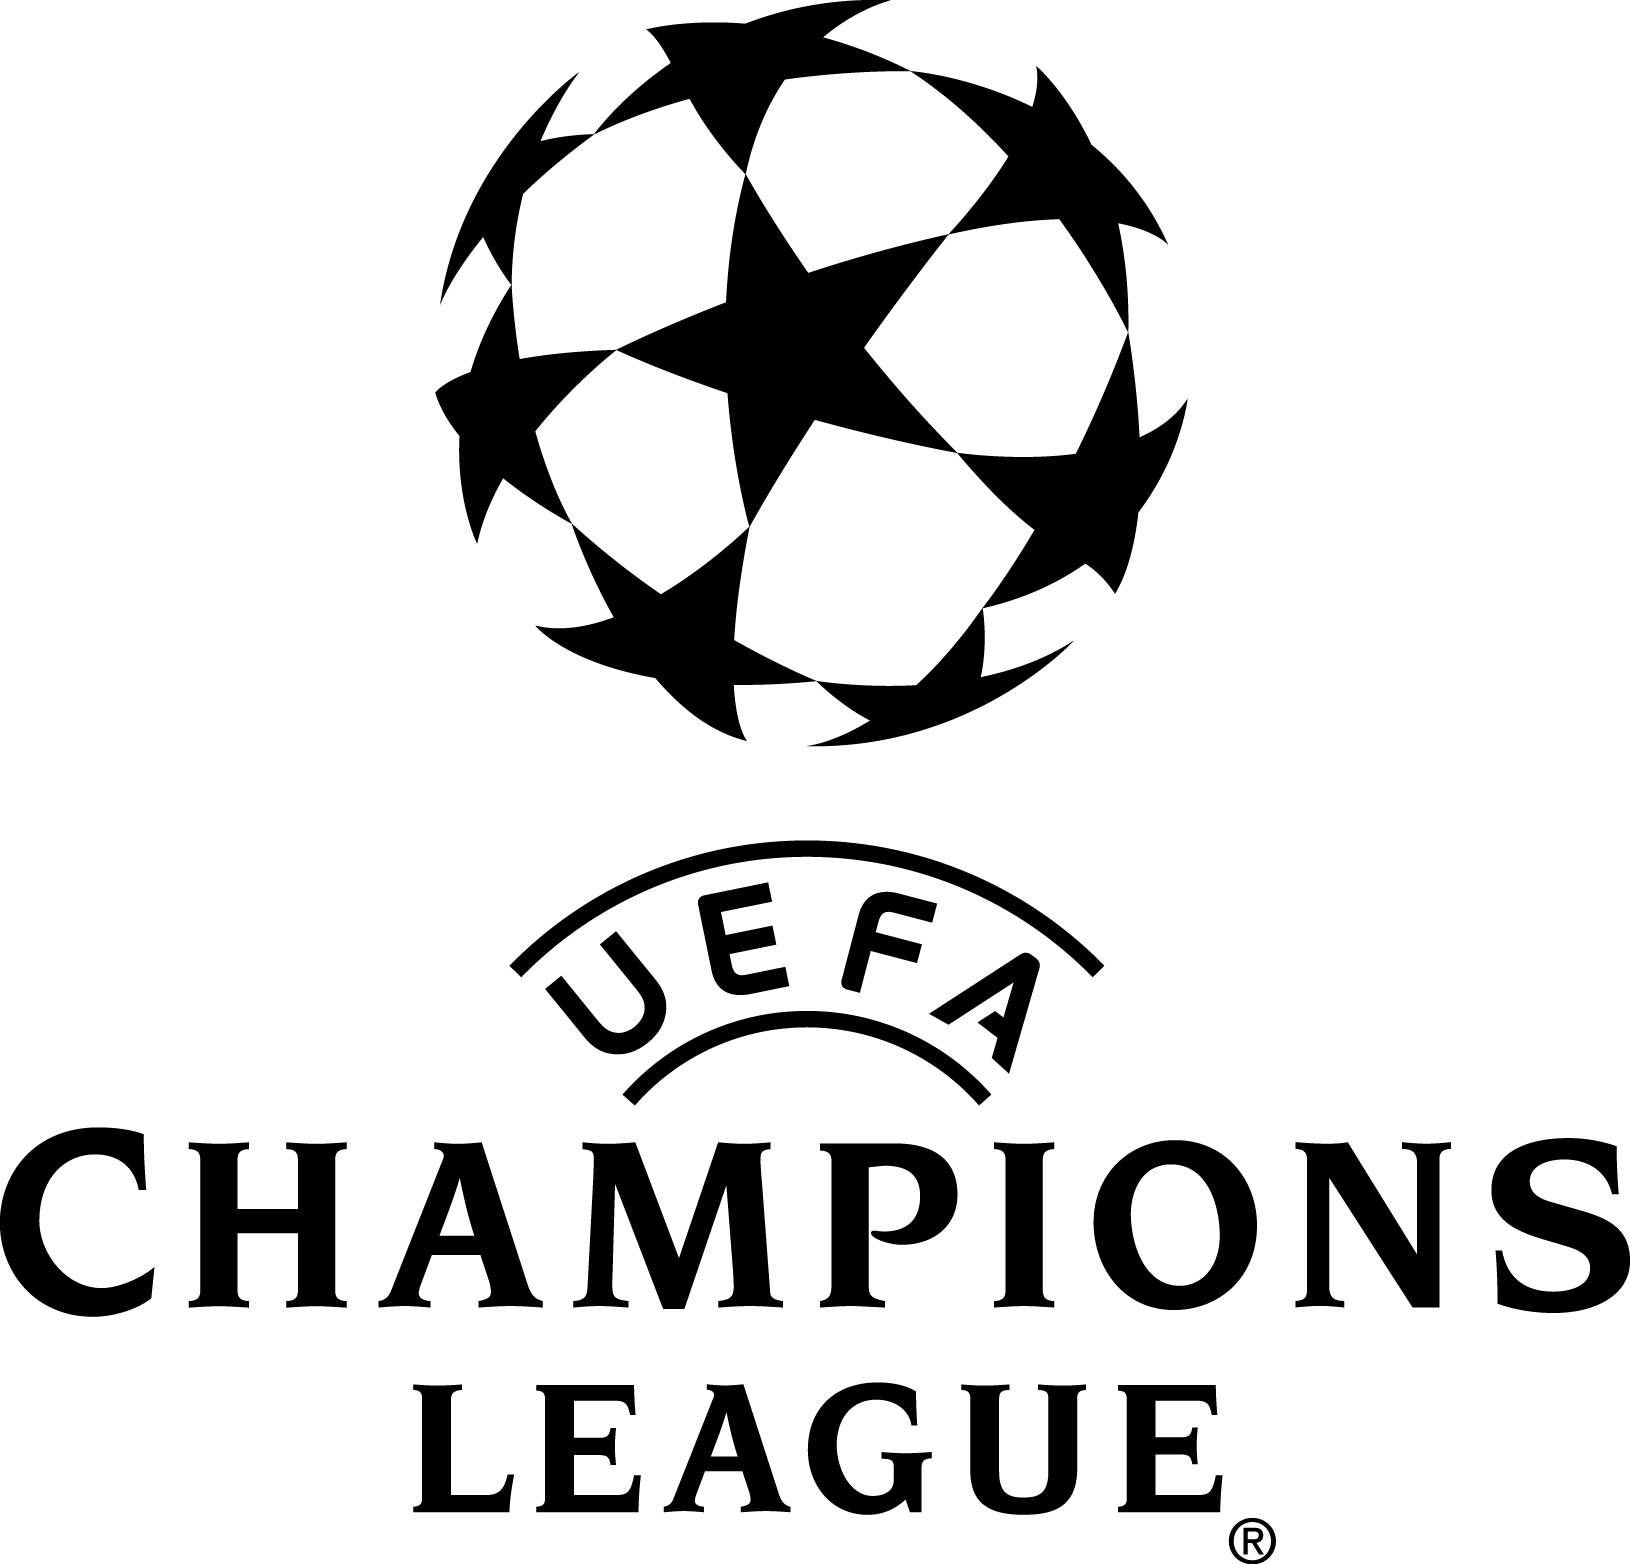 UEFA Super Cup logo vector